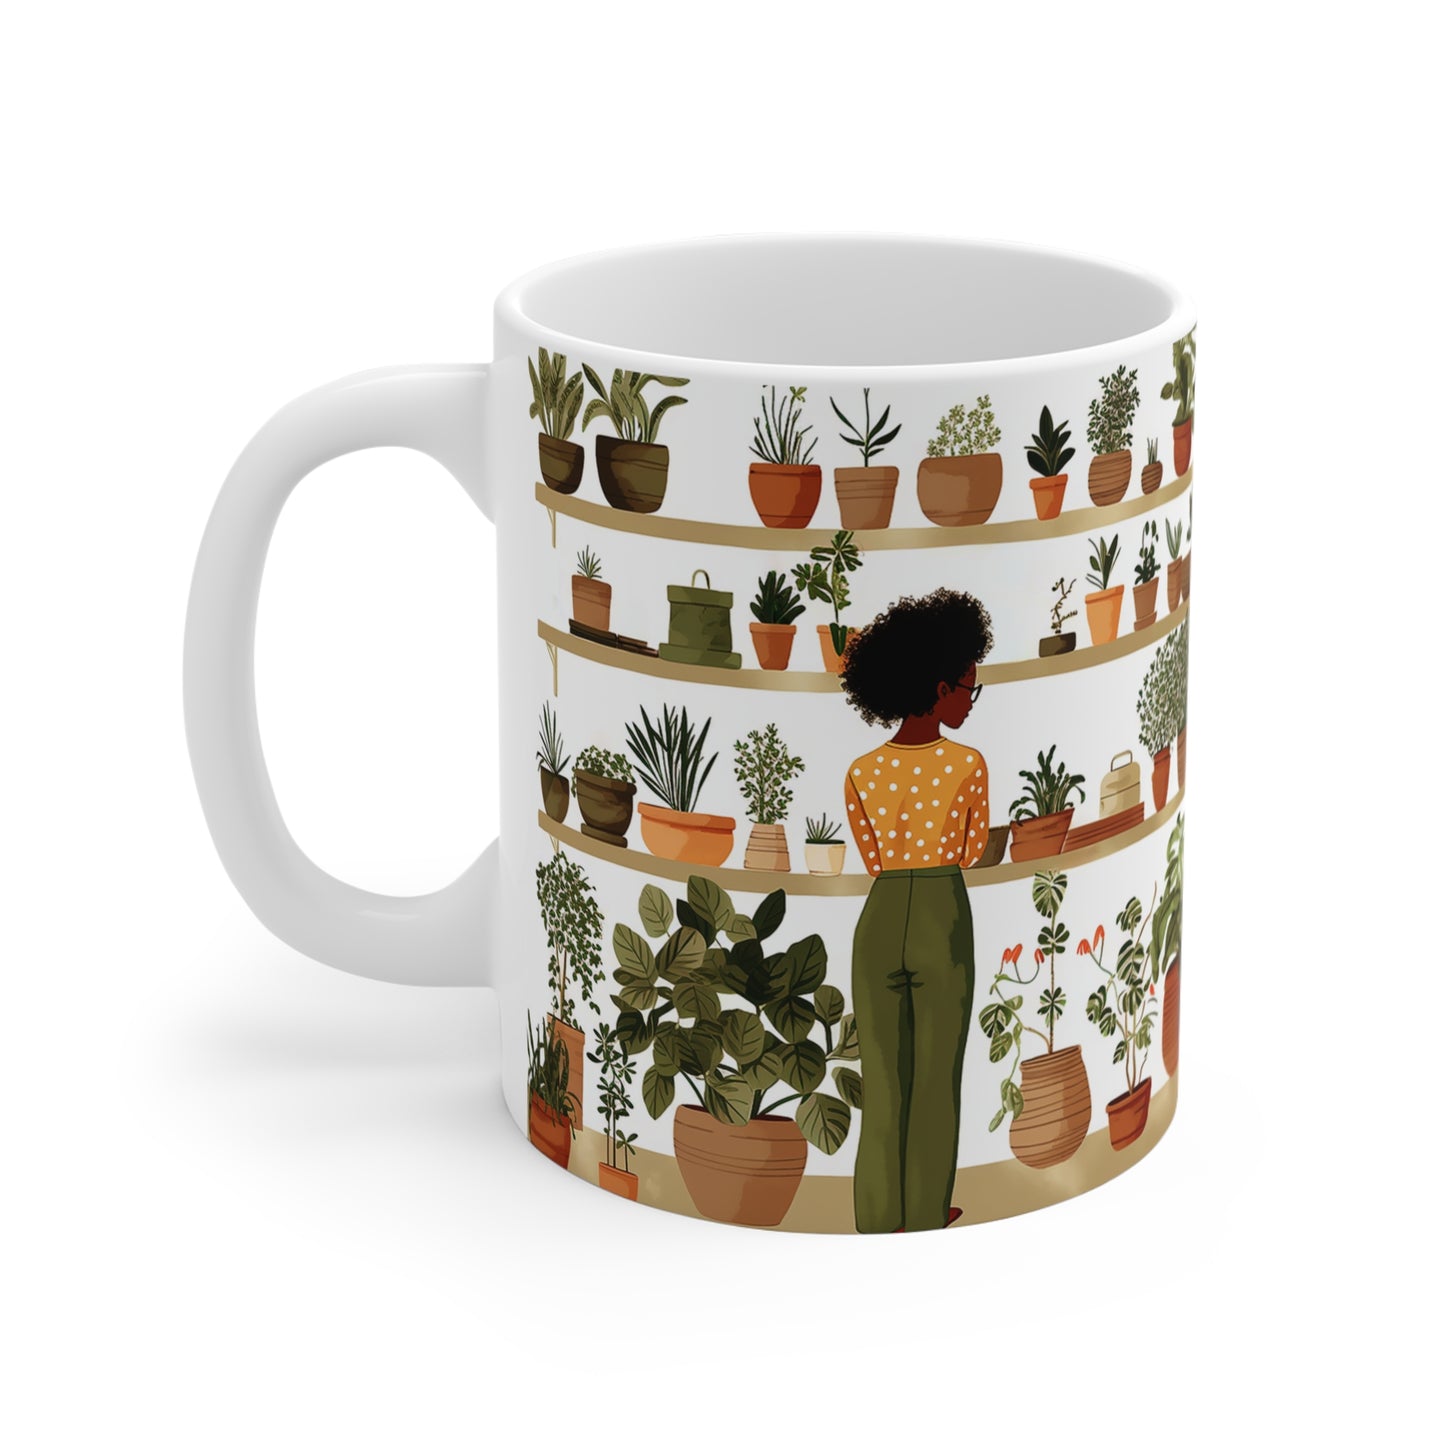 Plant Shopping Mug